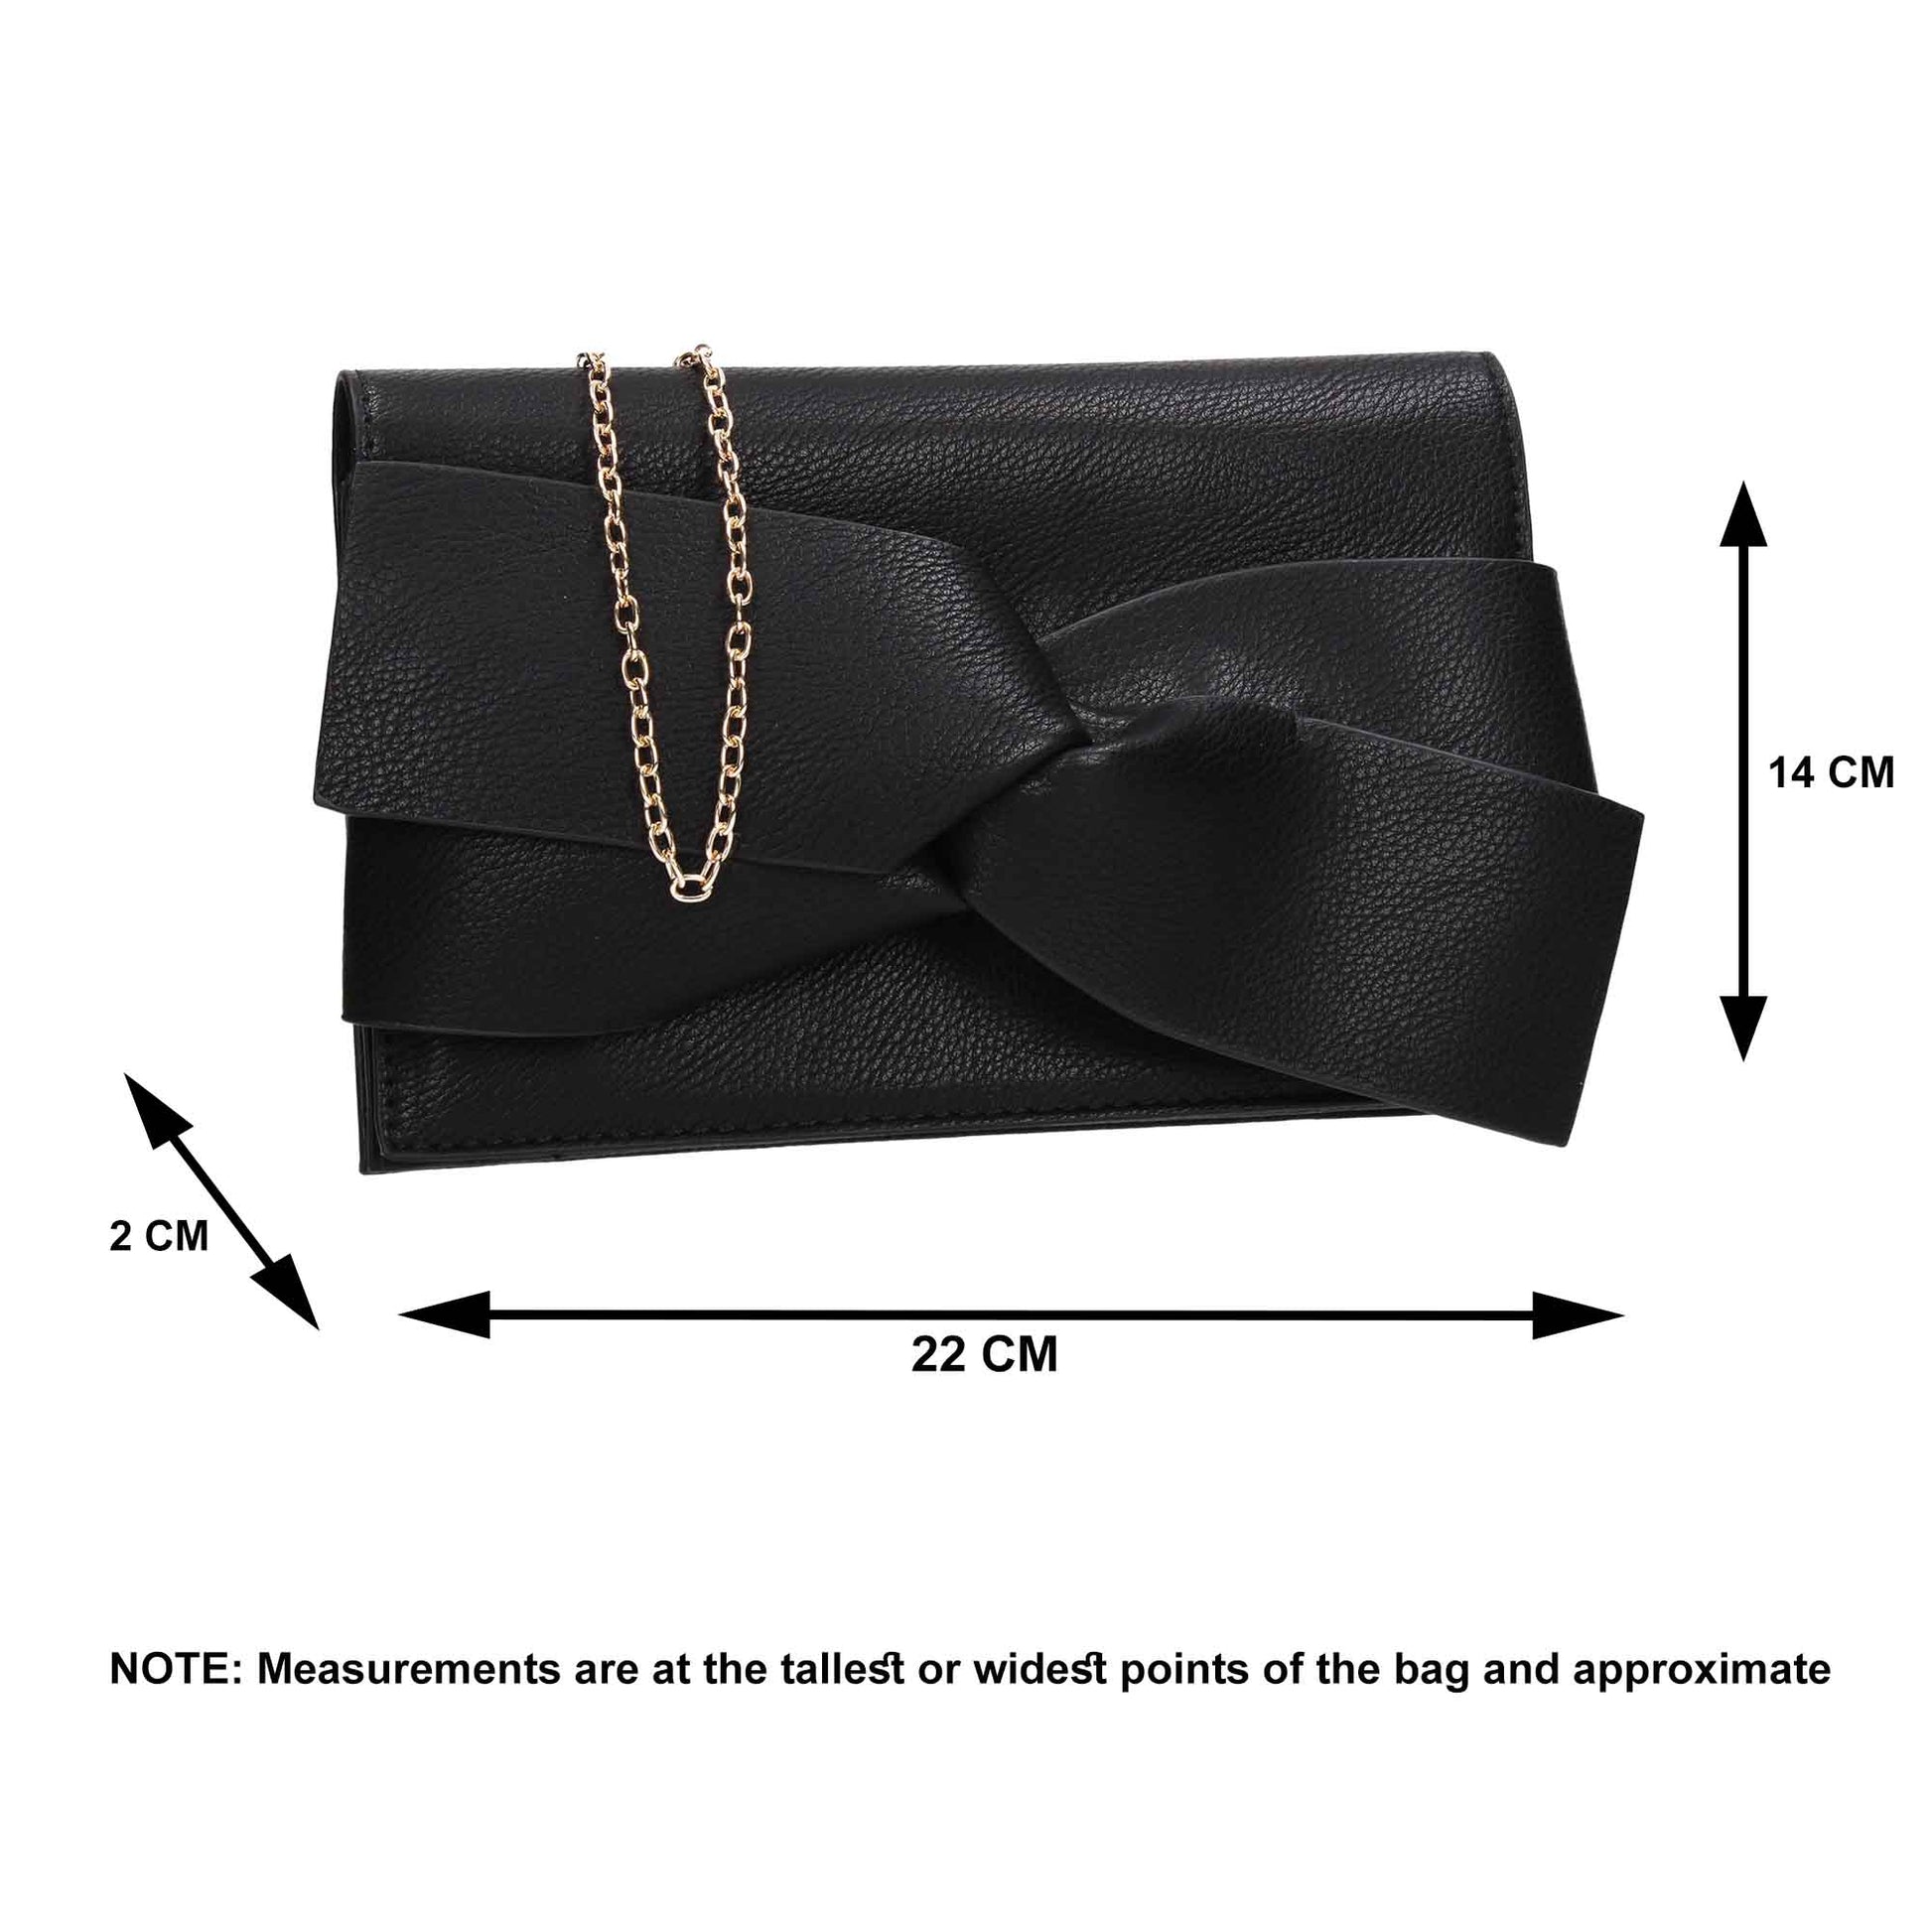 SWANKYSWANS Kira Bow Detail Clutch Bag Pink Cute Cheap Clutch Bag For Weddings School and Work